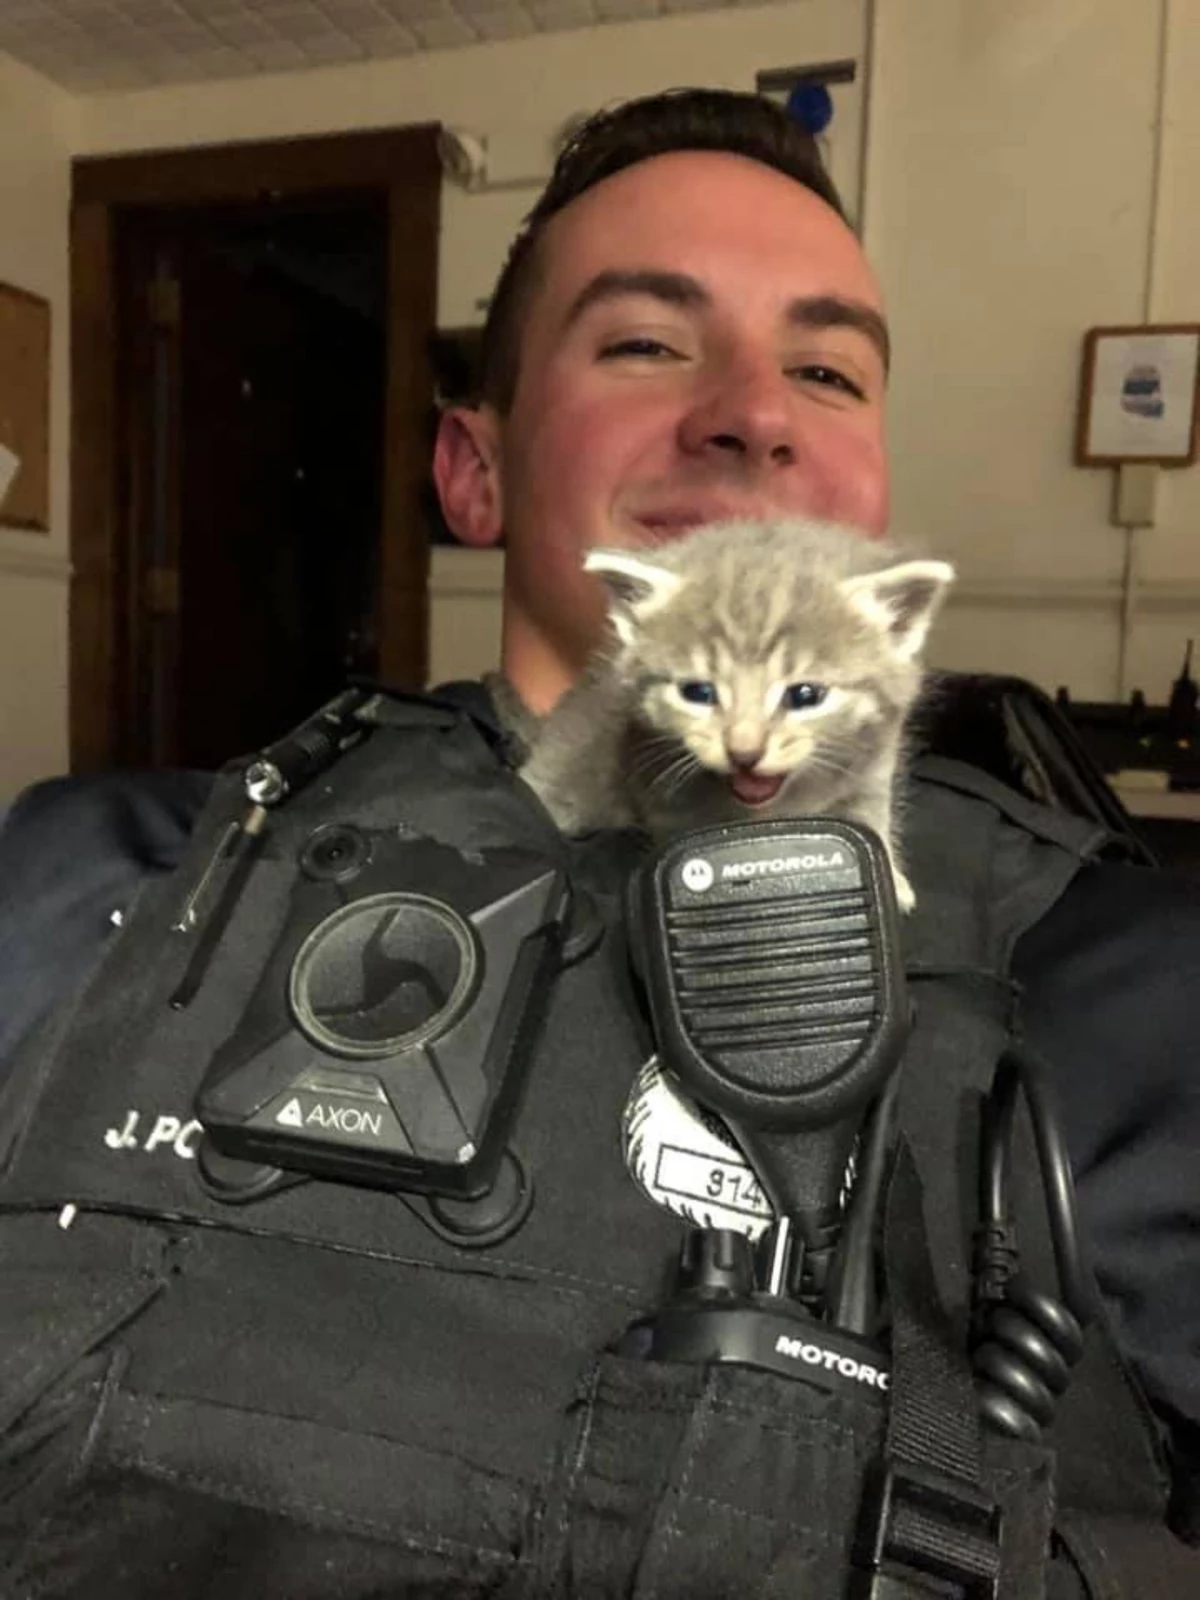 Cat Police Officer